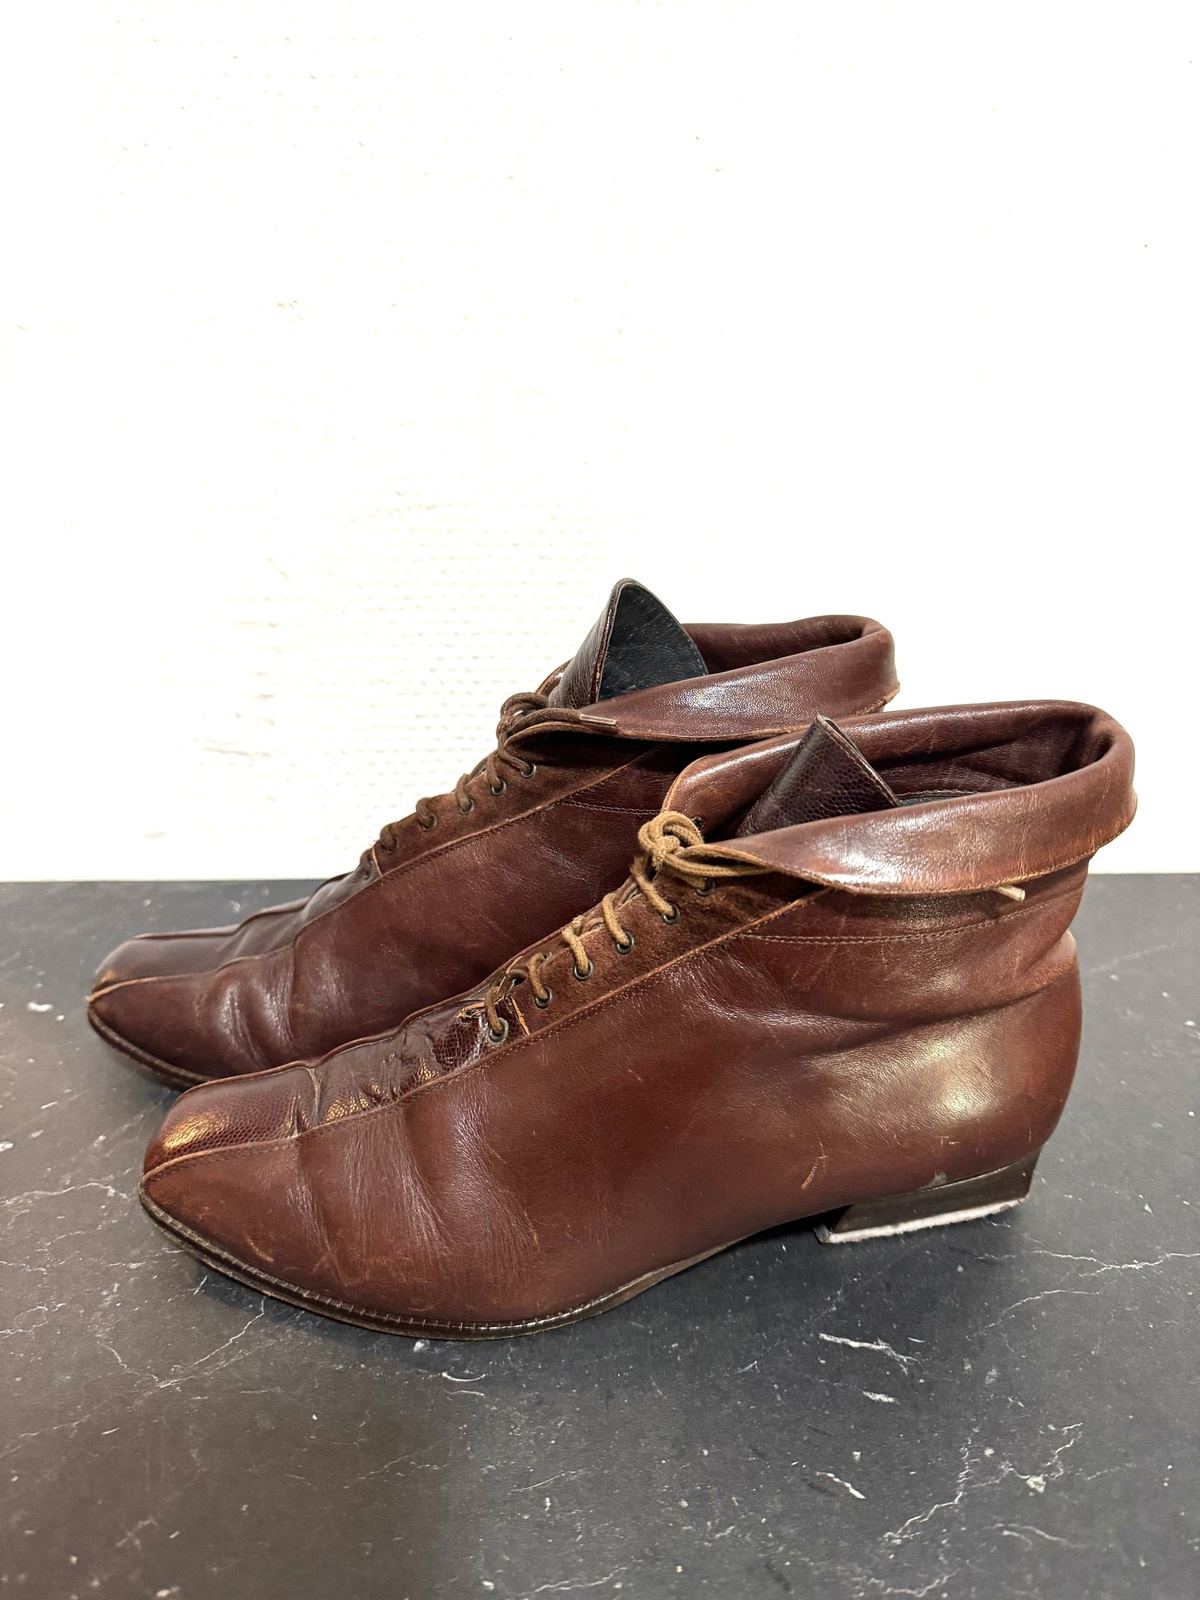 Vintage 80's Revival Leather shoes